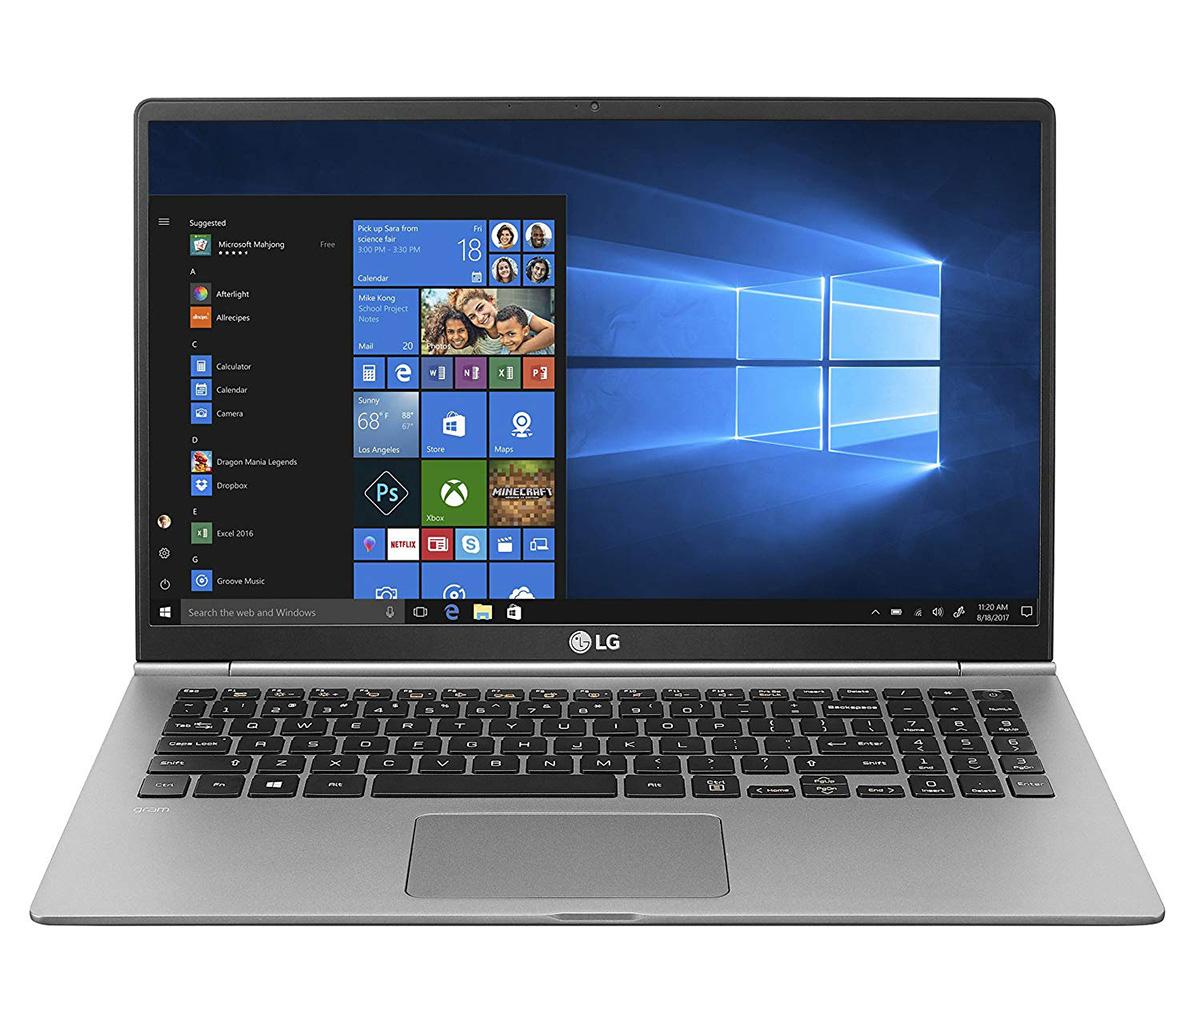 LG Gram 15.6in i5-8265U 8GB Thin Laptop for $799 Shipped